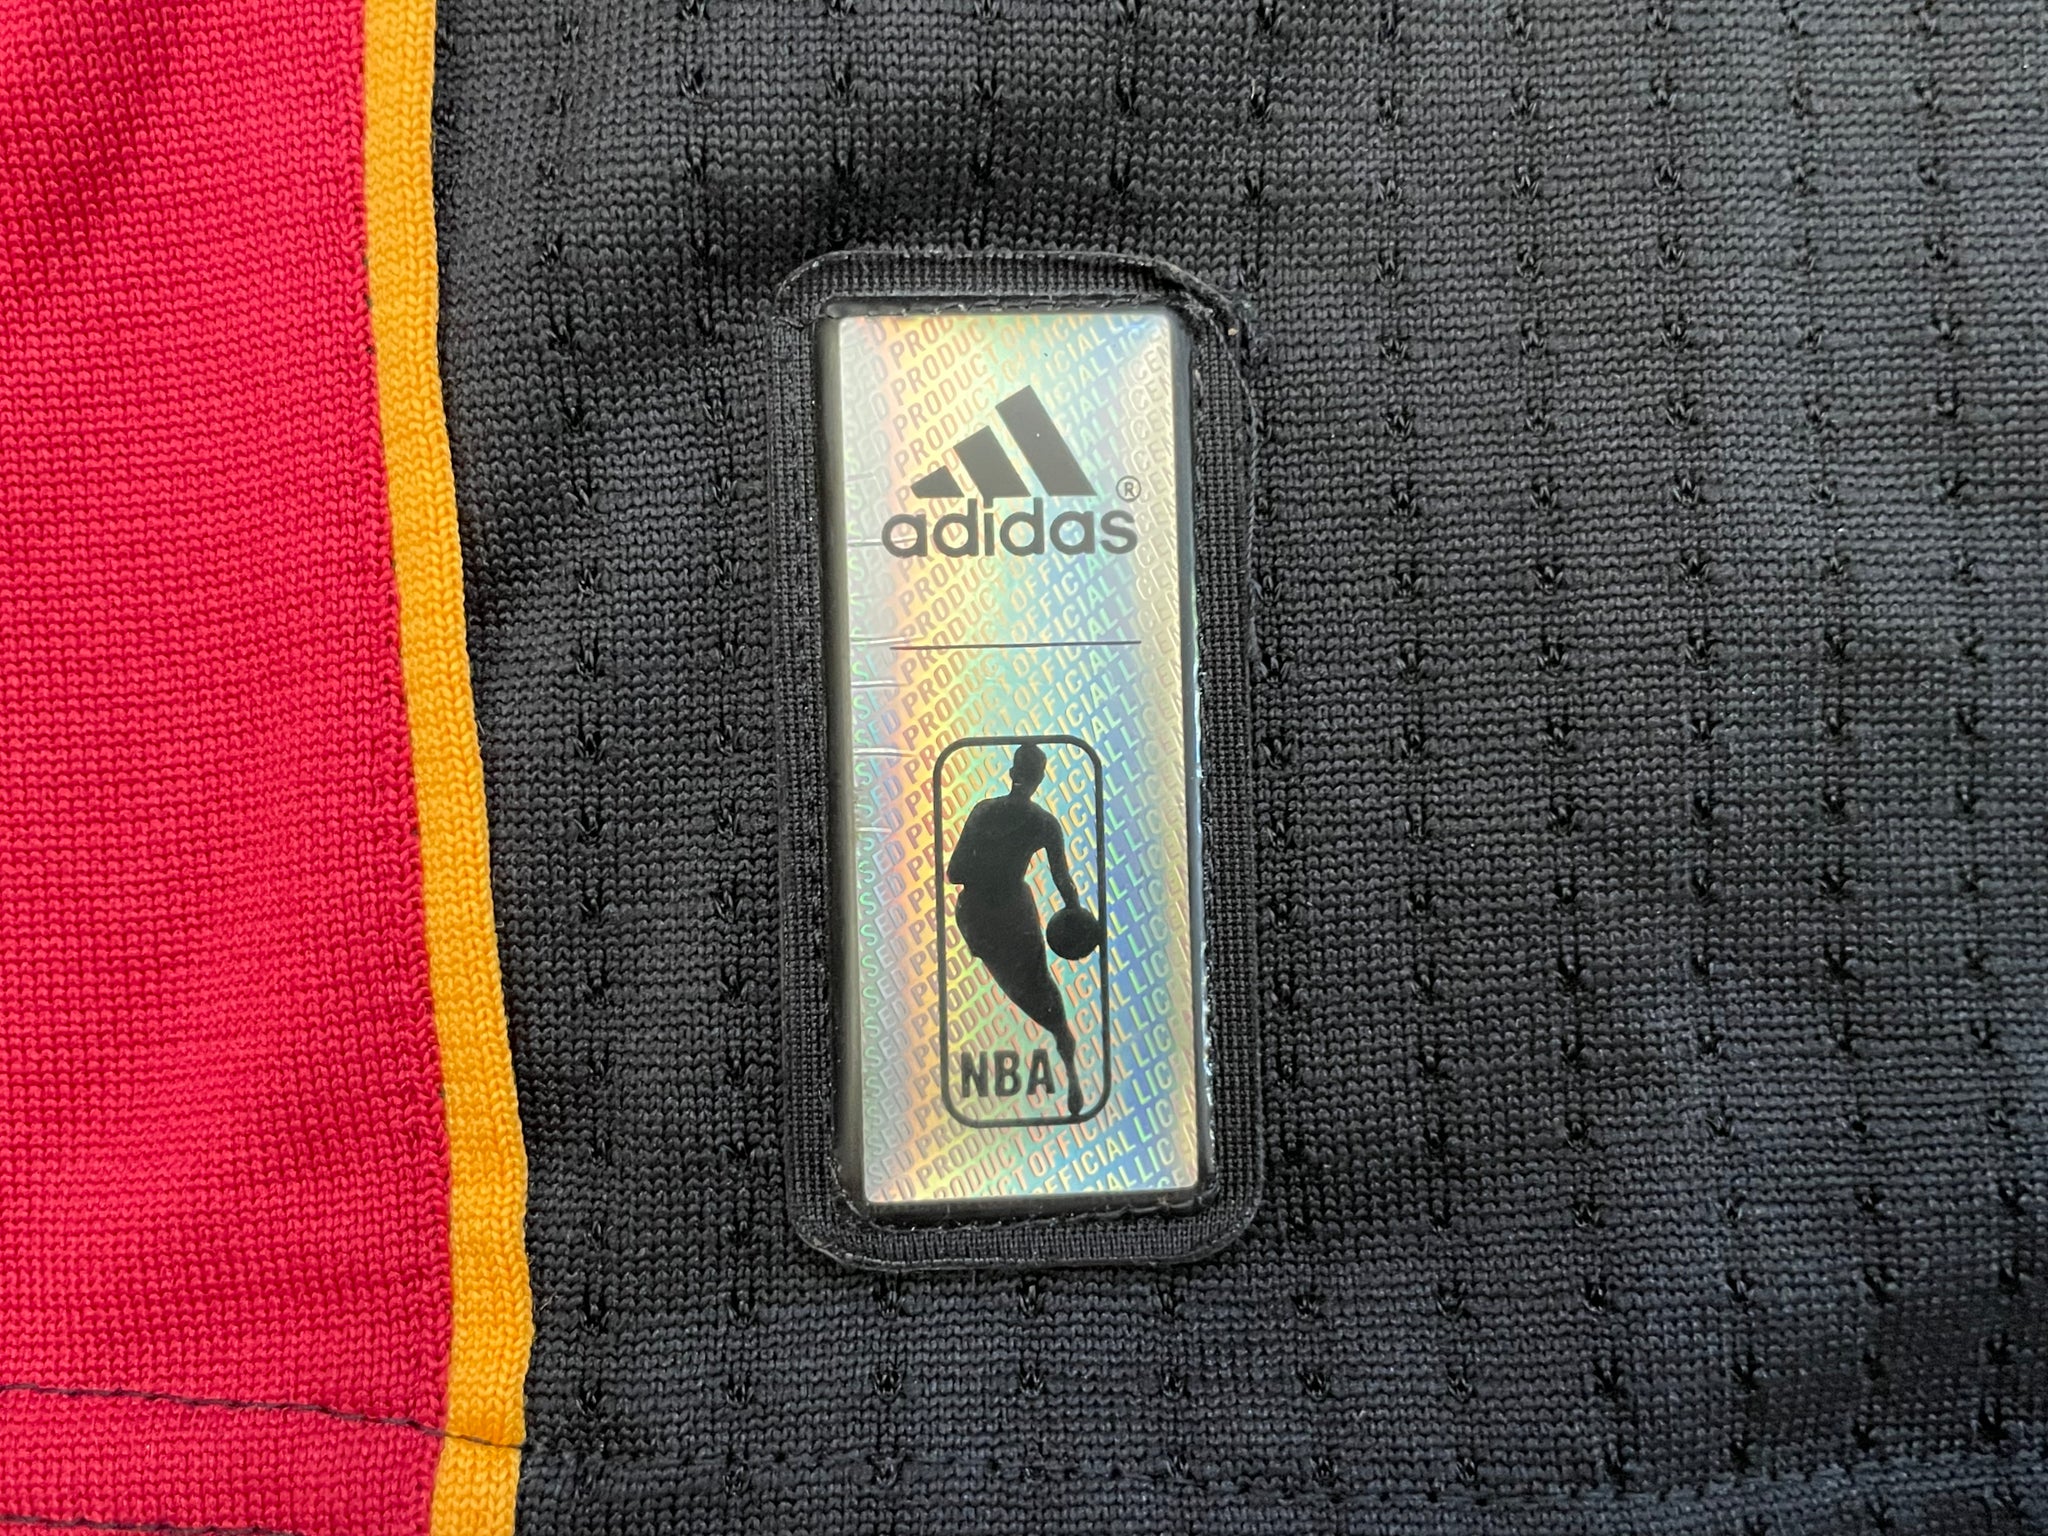 Vintage Adidas Authentic NBA Miami Heat Lebron James Jersey Size